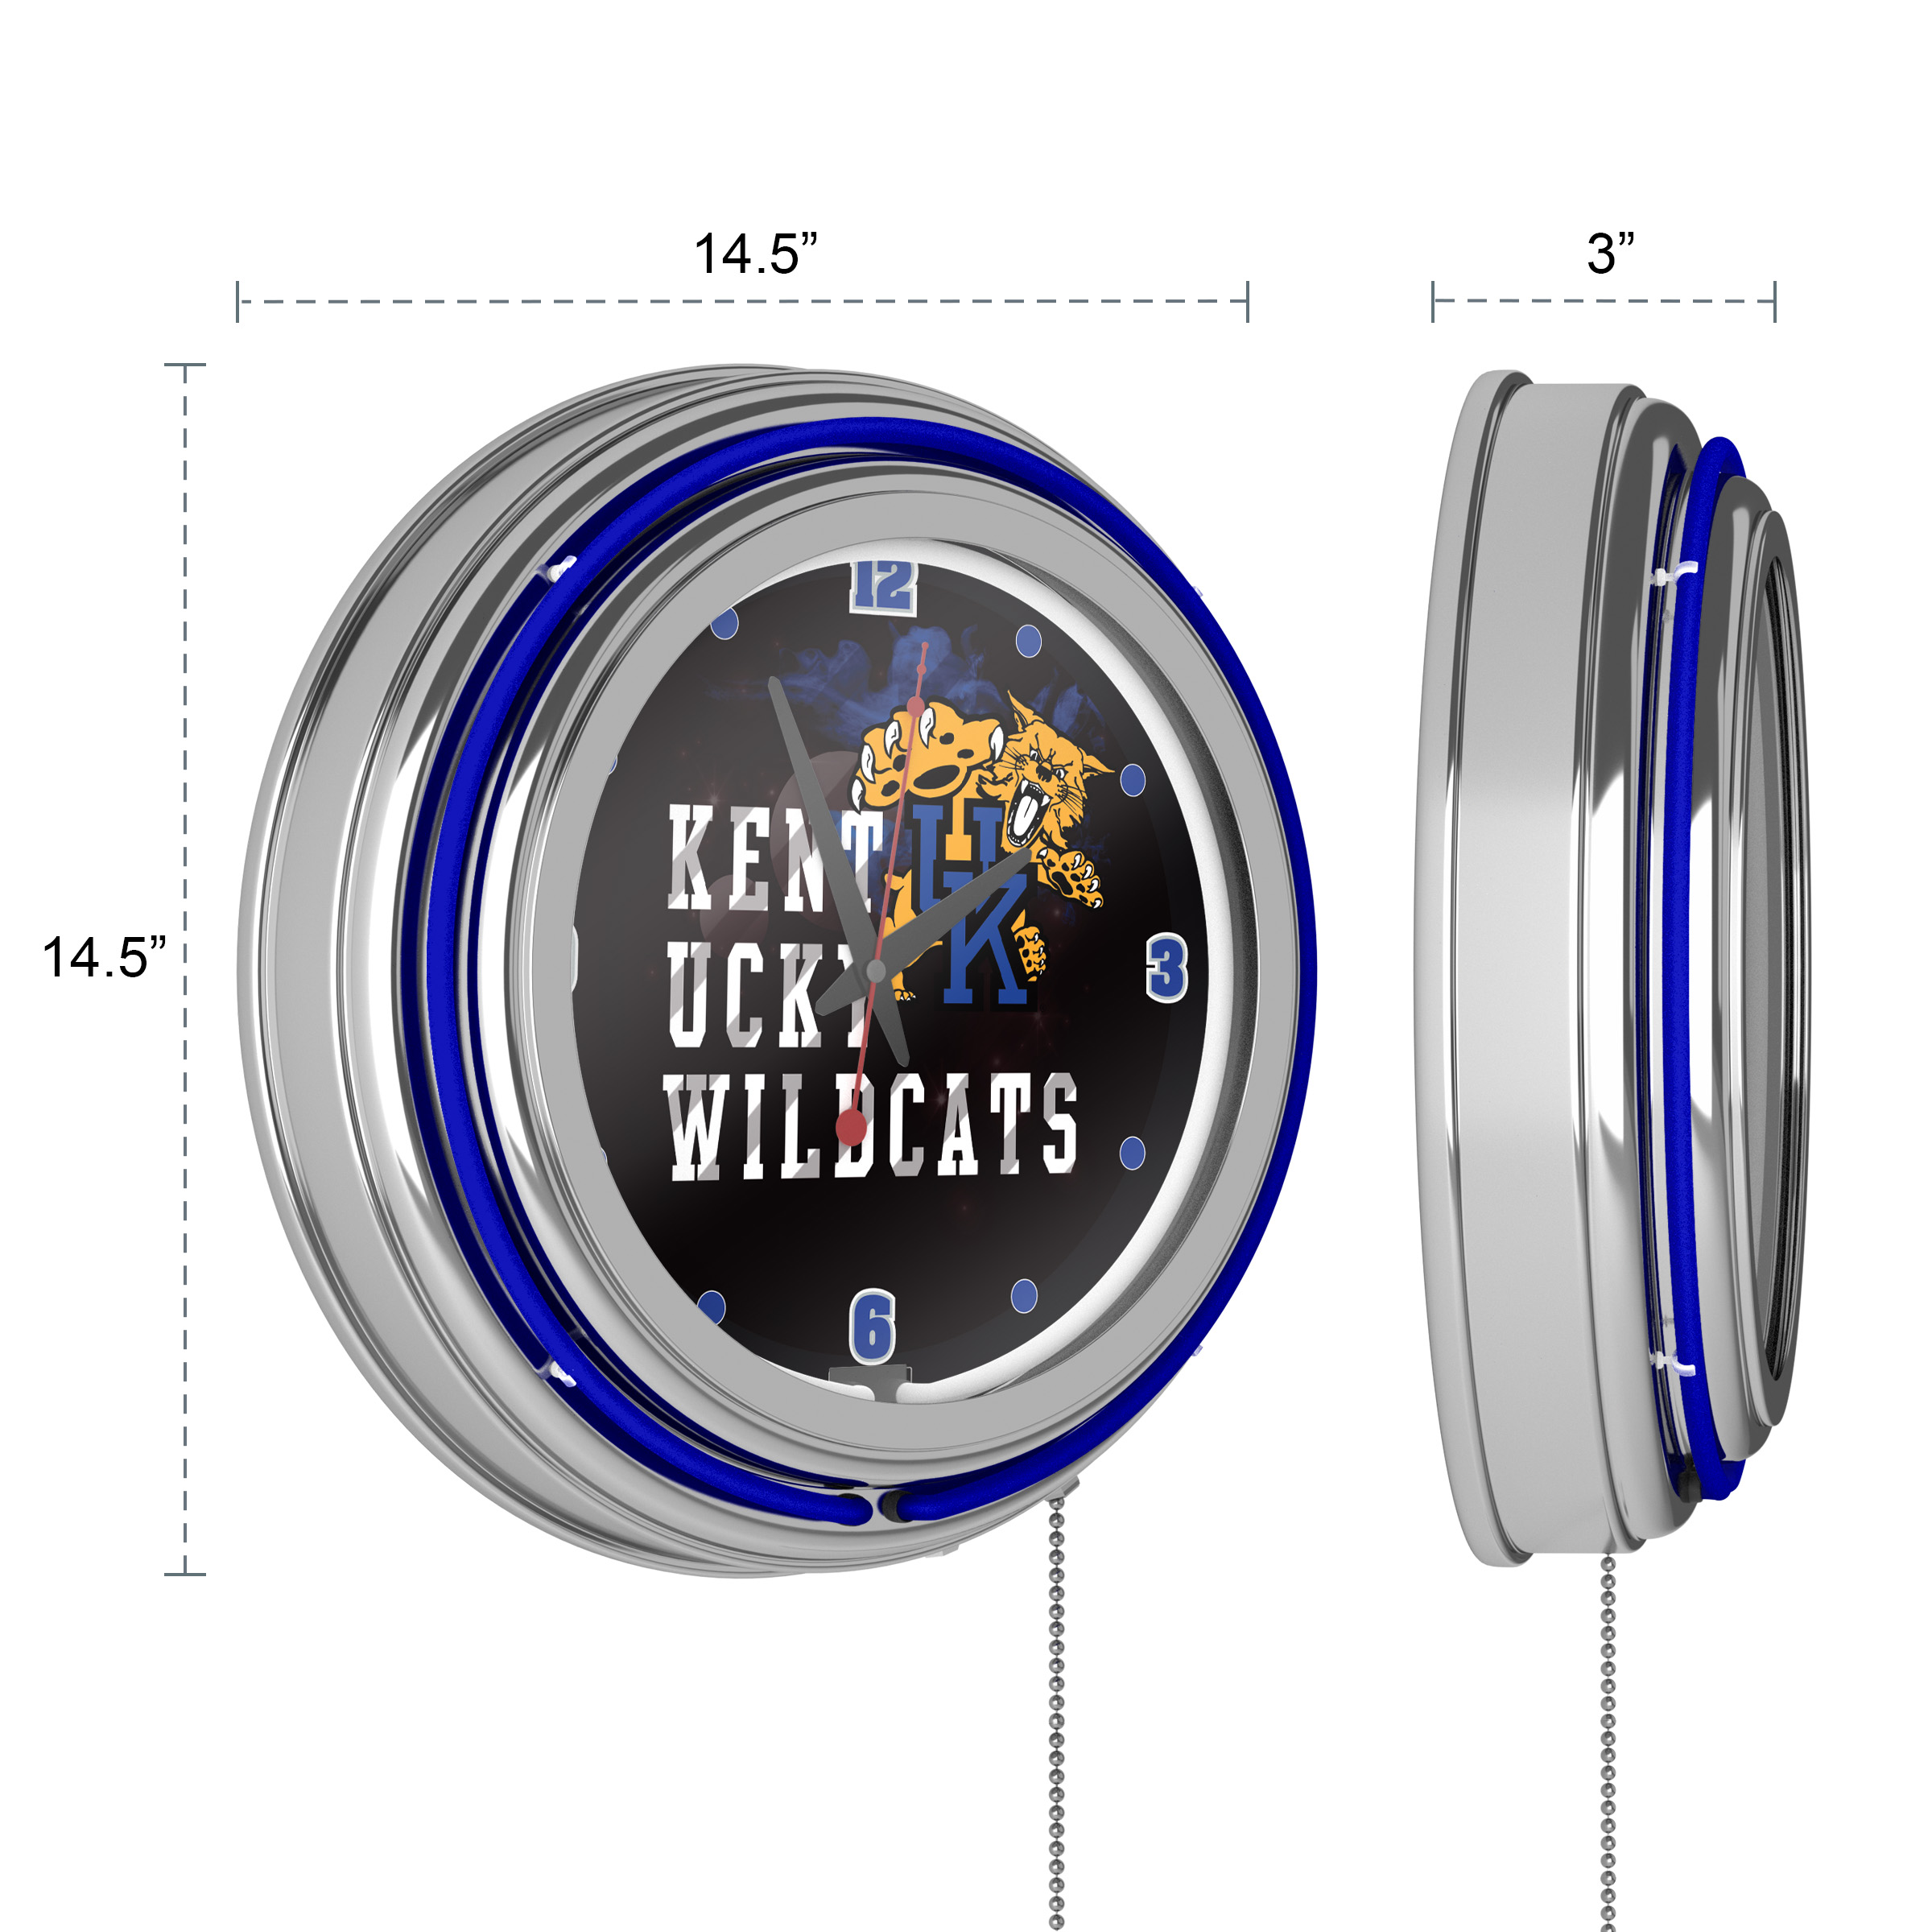 University of Kentucky Wildcats Chrome Double Rung Neon Clock - Smoke - image 3 of 6